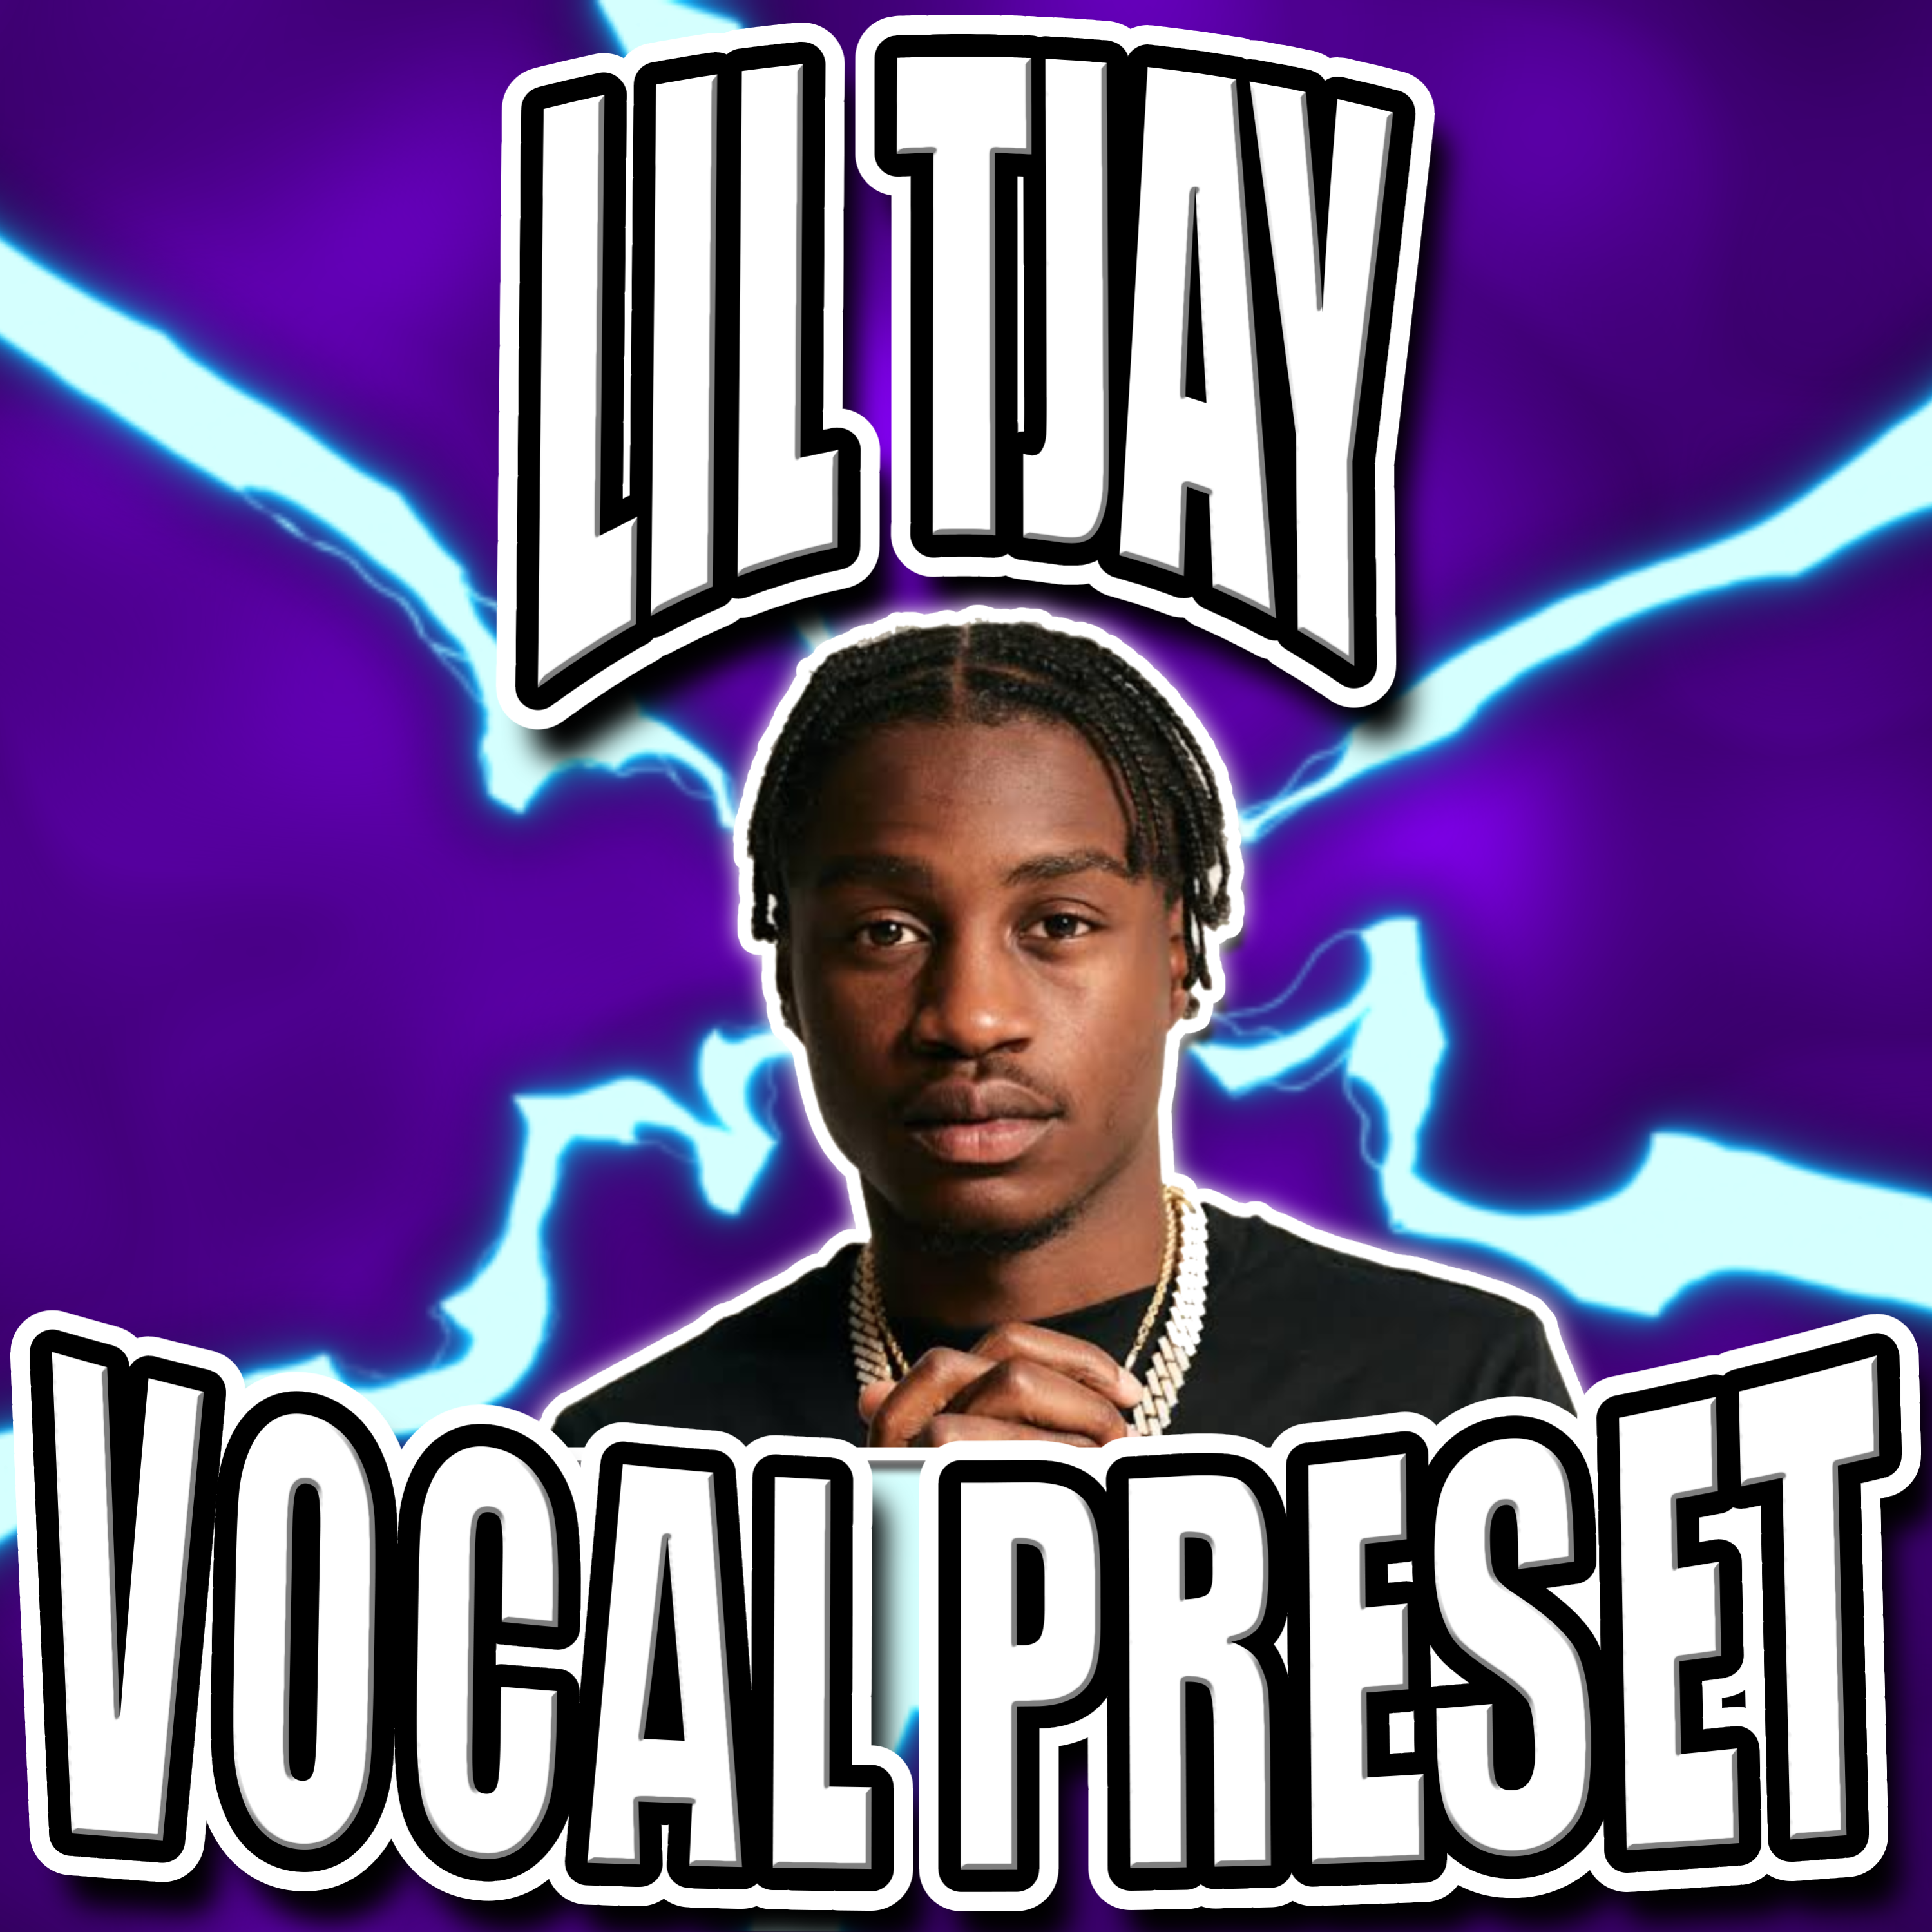 The Lil Tjay Vocal Preset